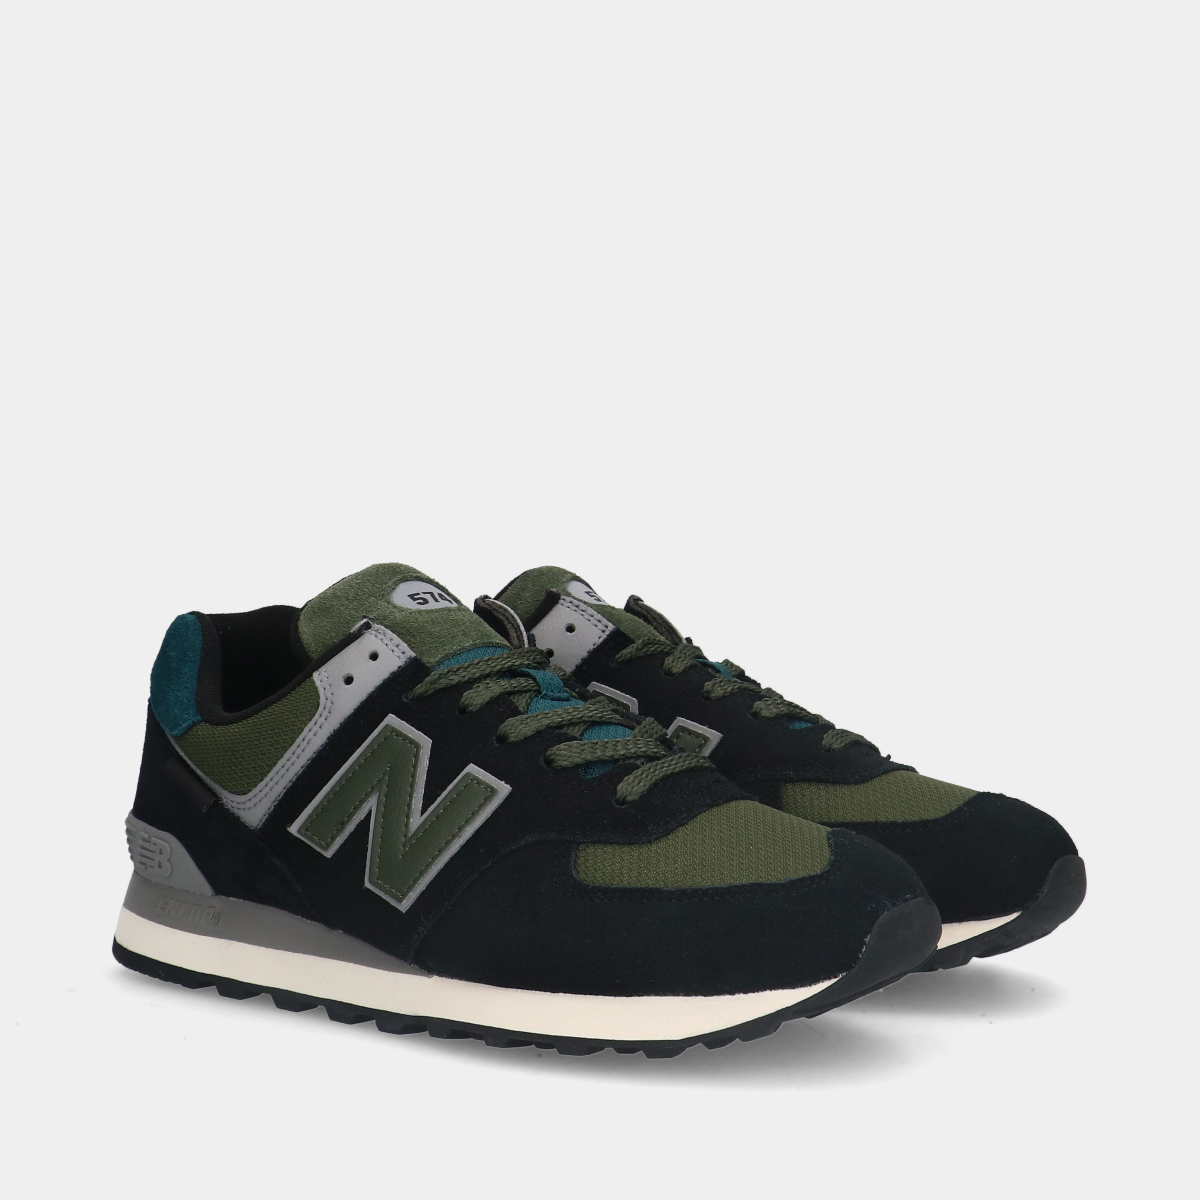 New Balance 574 Black/ Green heren sneakers